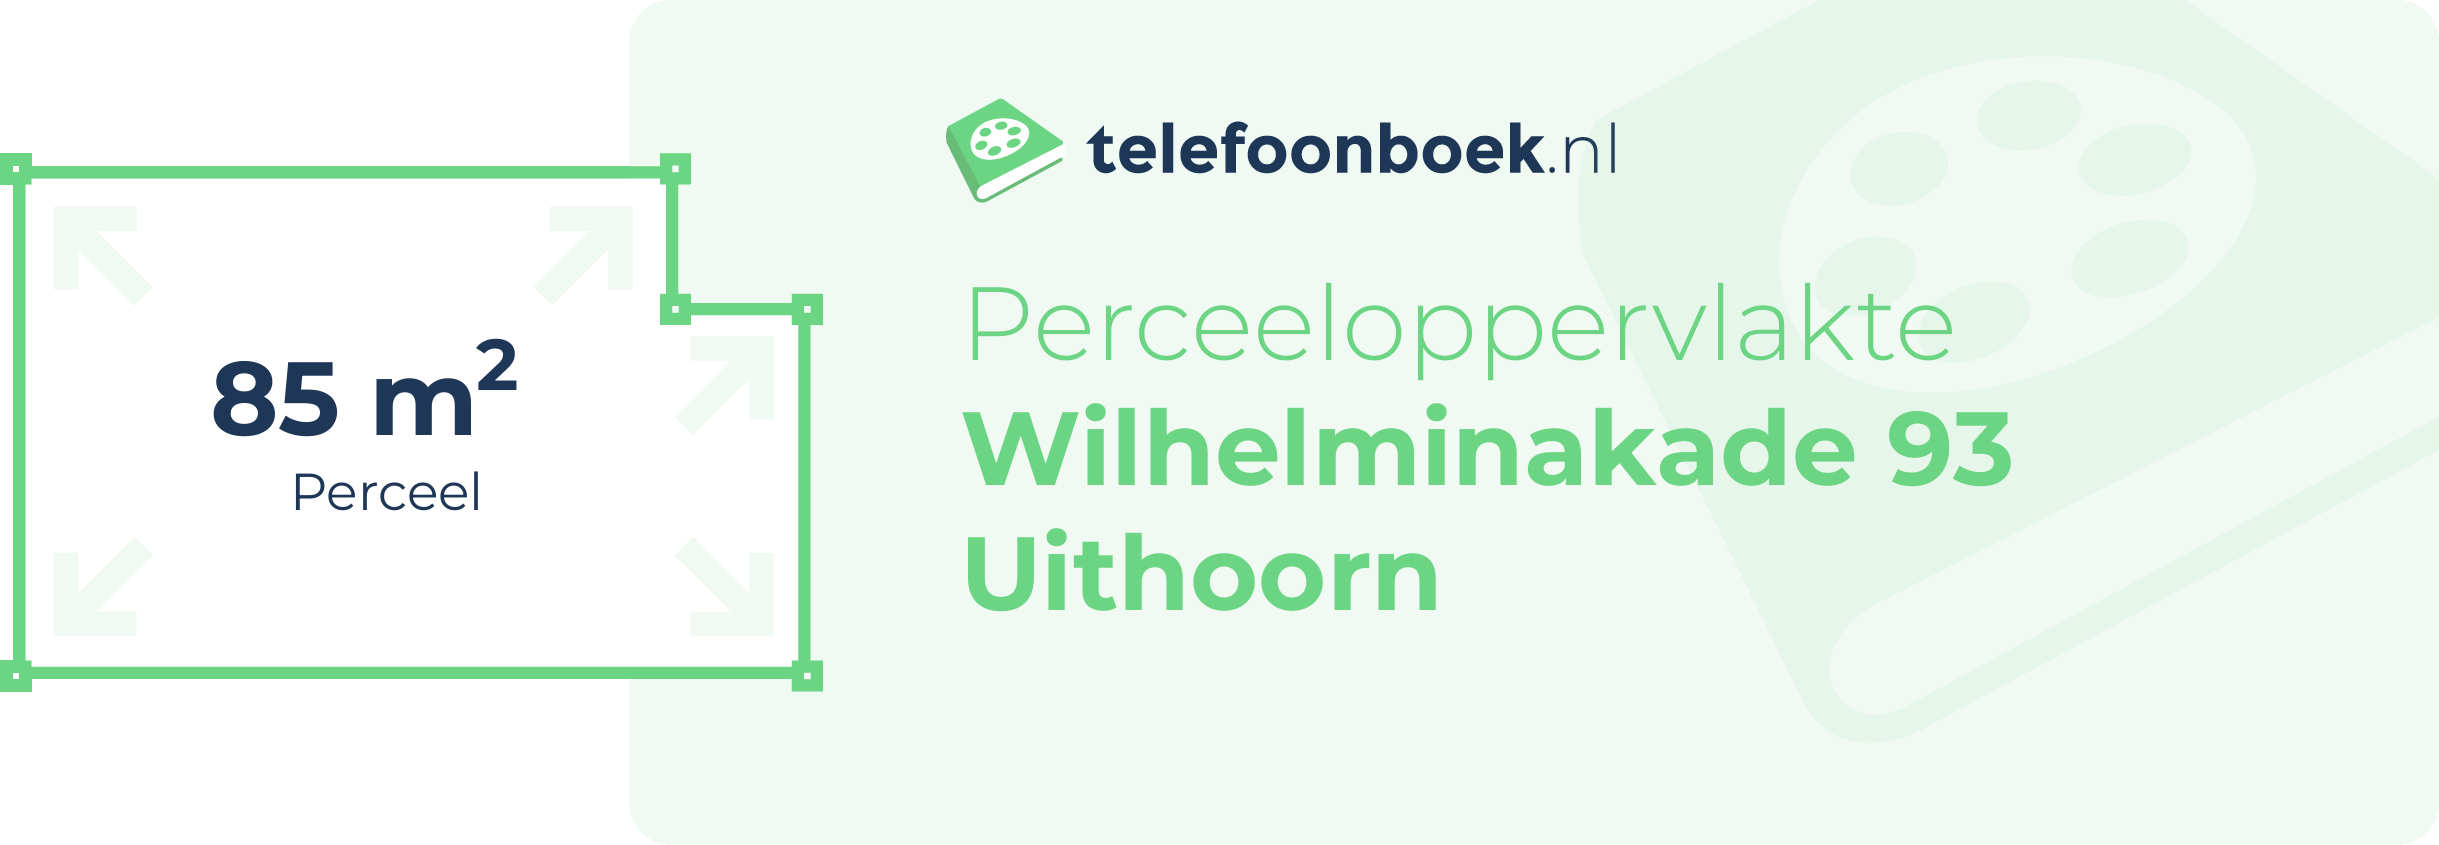 Perceeloppervlakte Wilhelminakade 93 Uithoorn